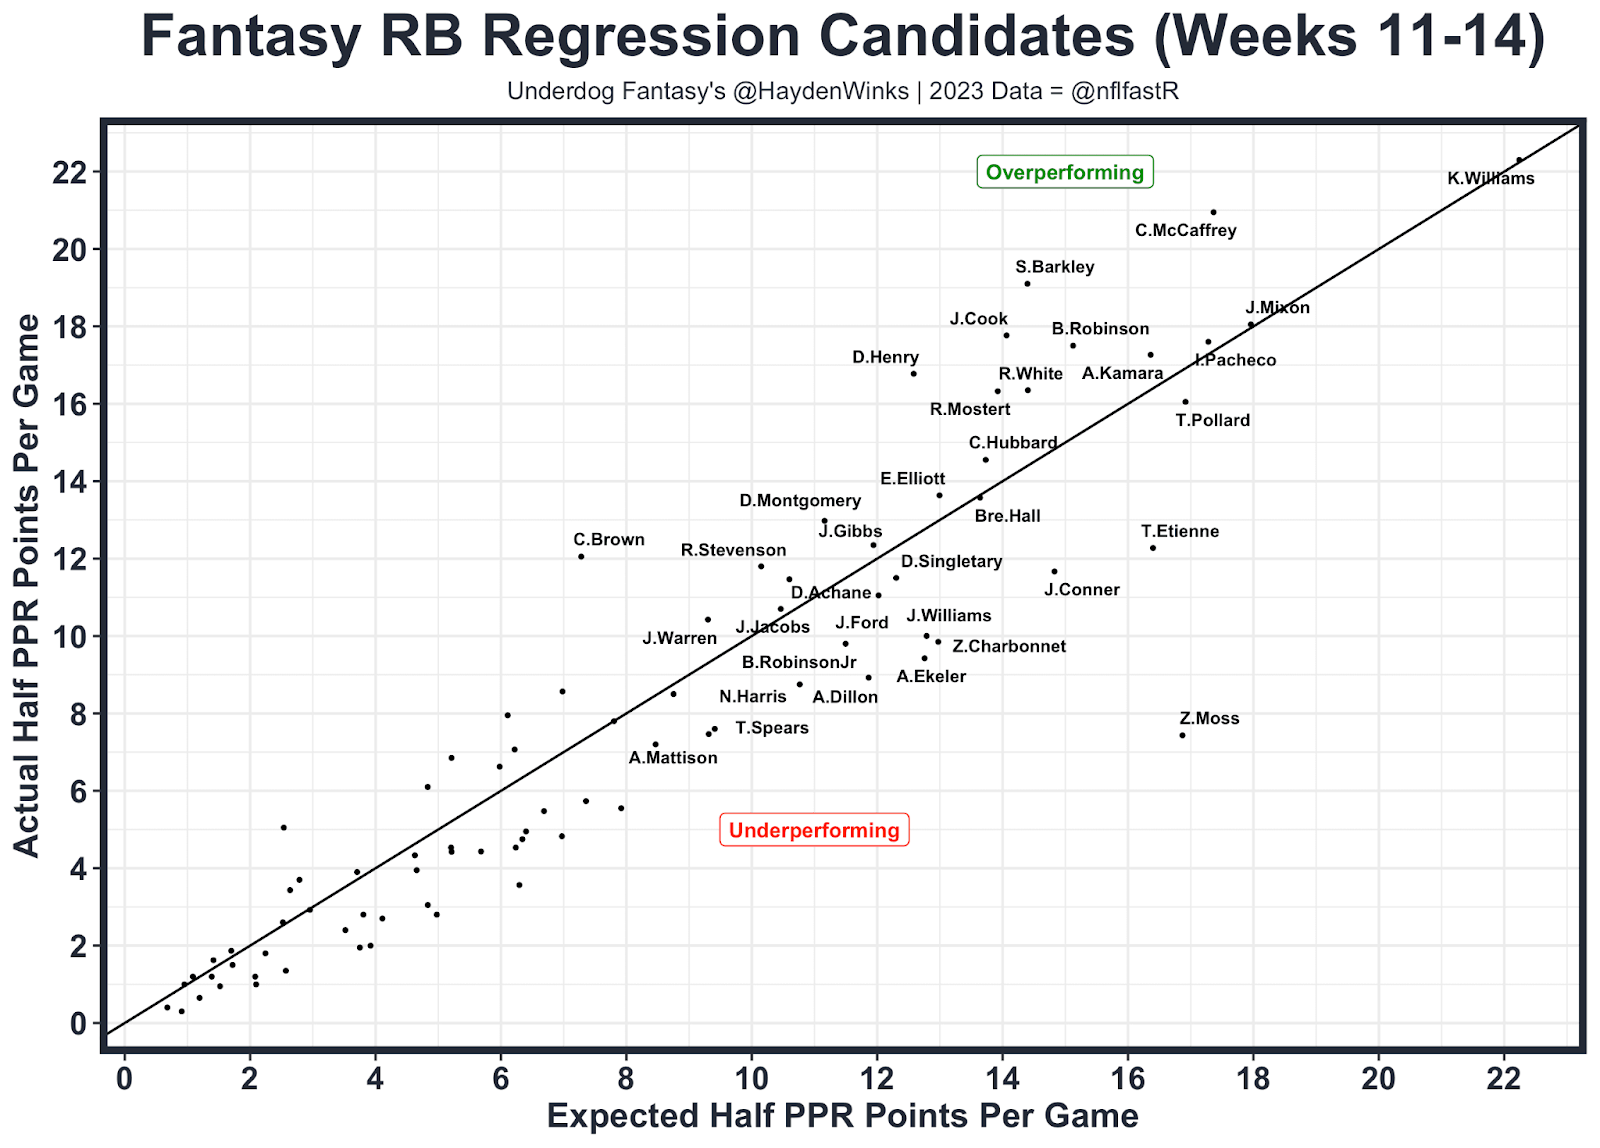 RB Regression Candidates